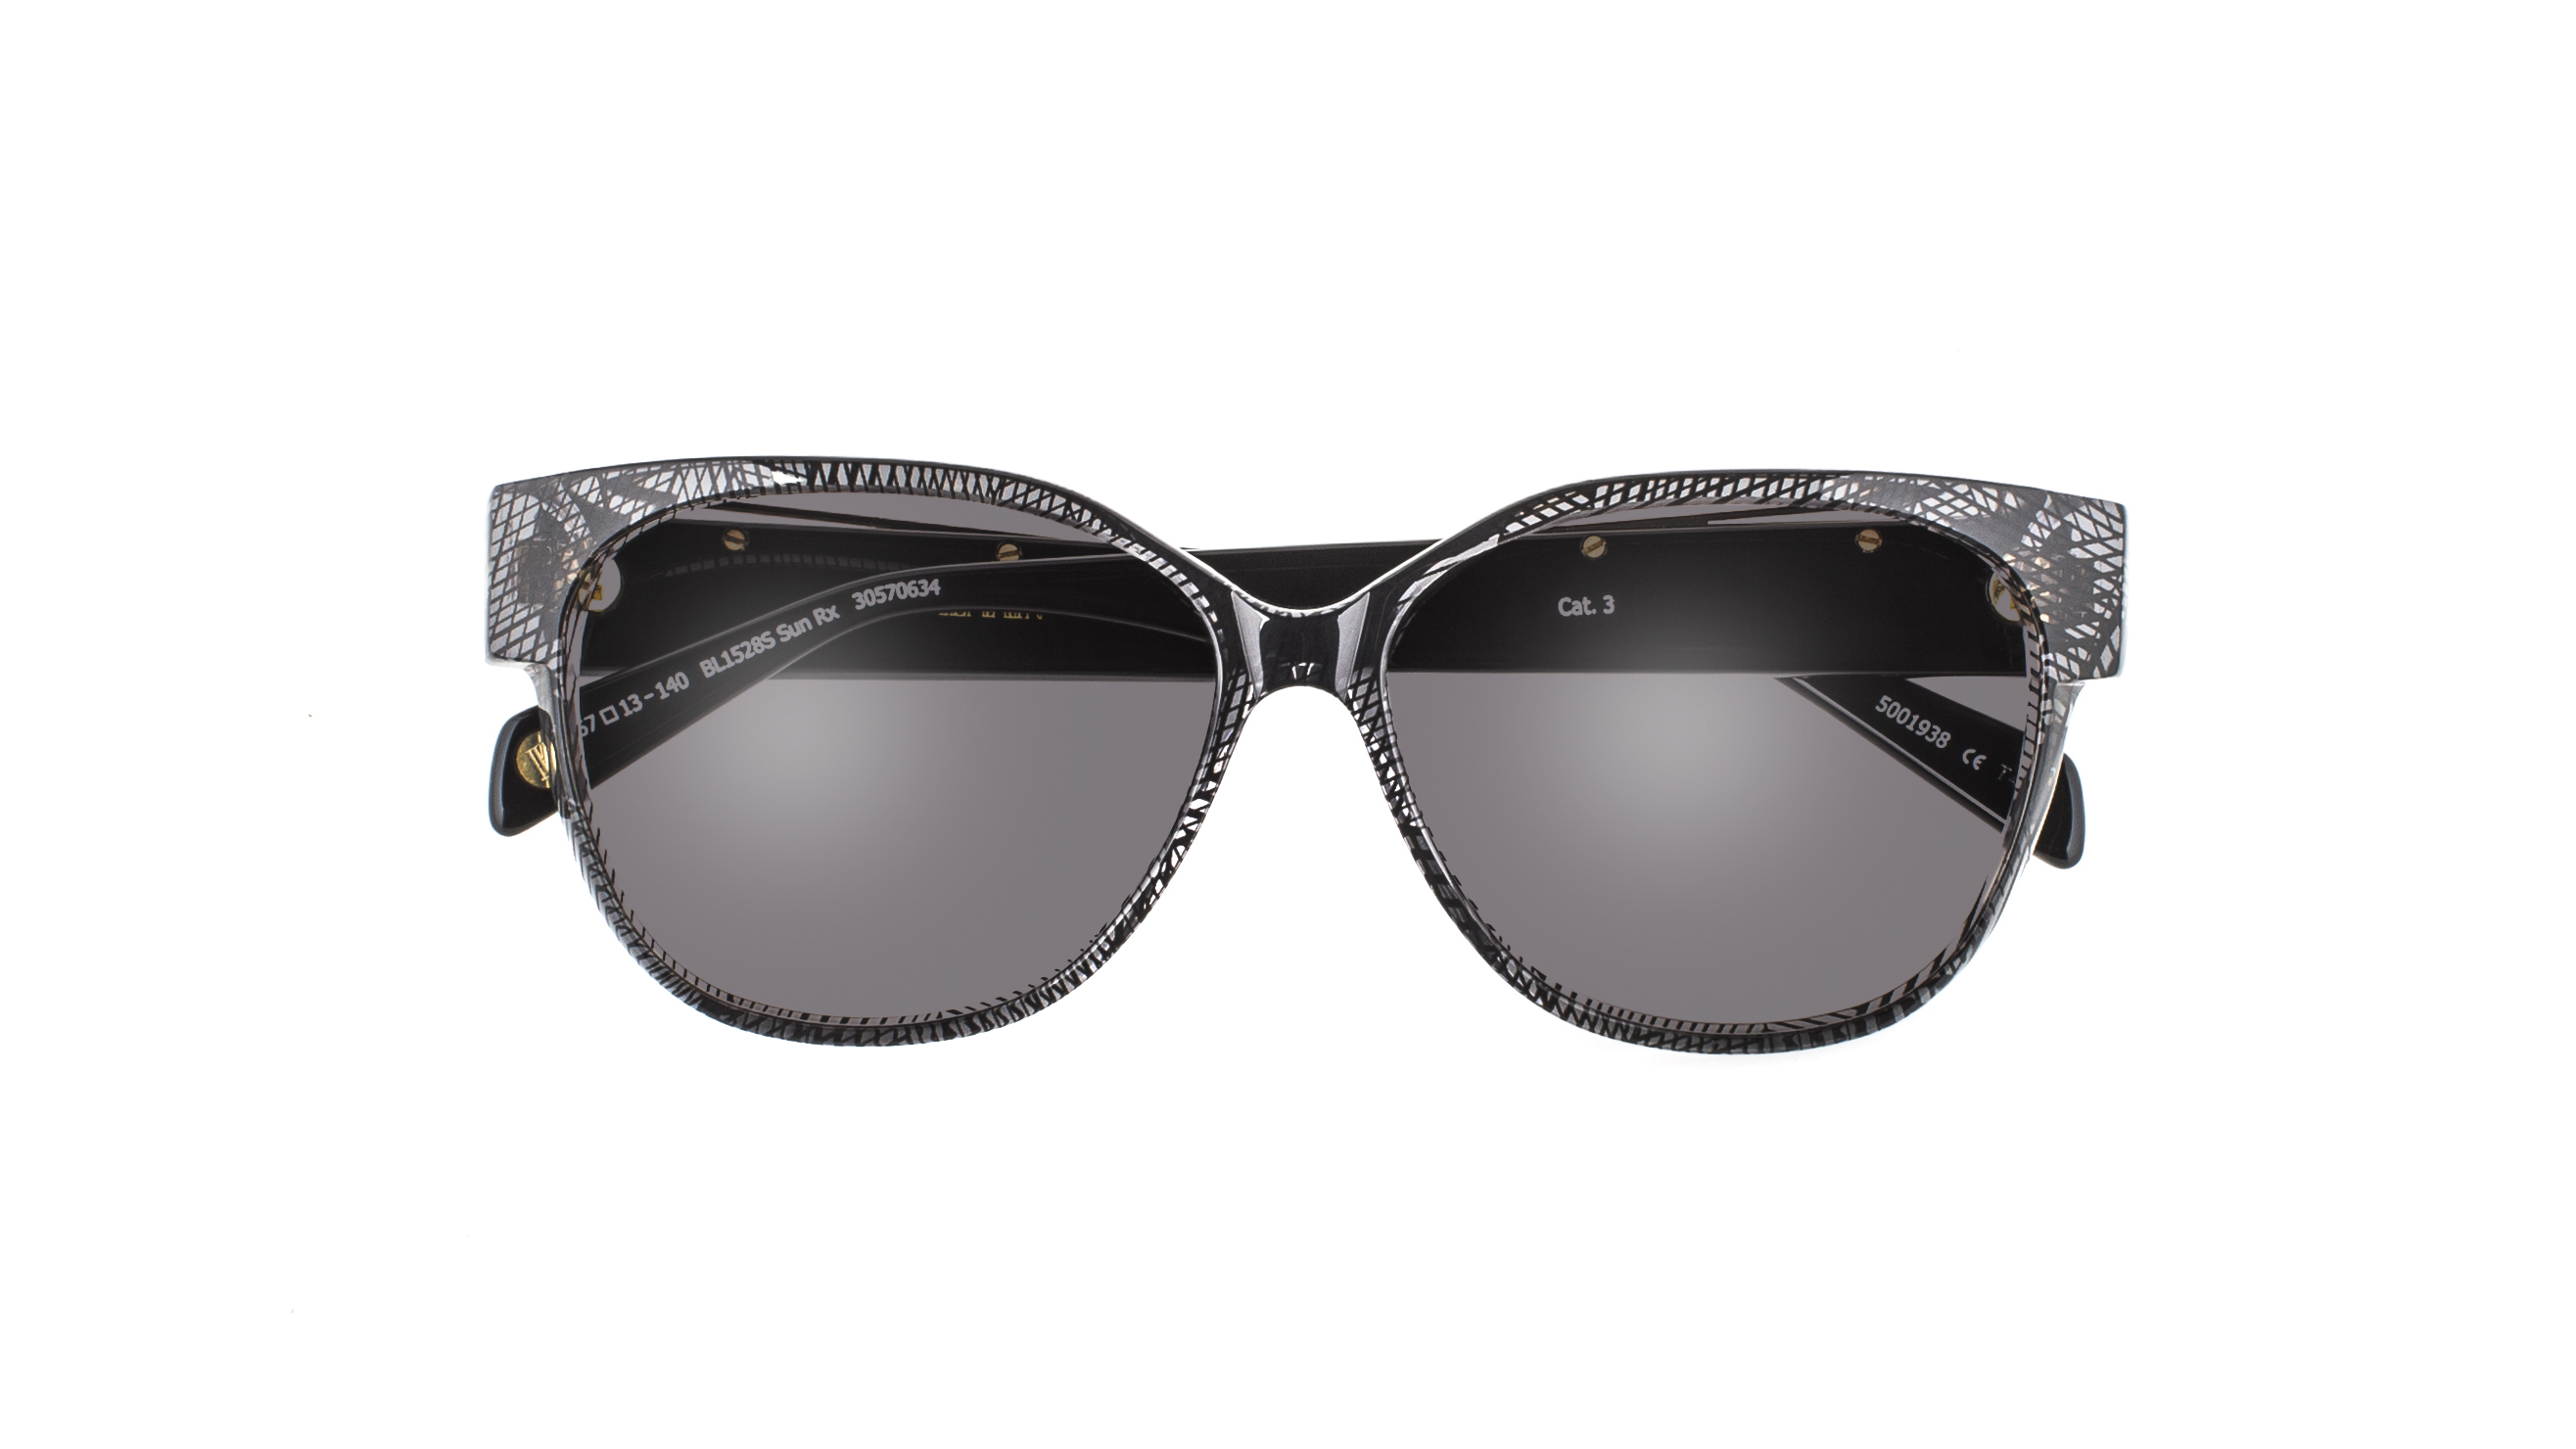 Balmain x Specsavers BL15015 SUN RX 30686915 - RRP 2 pairs single vision $459